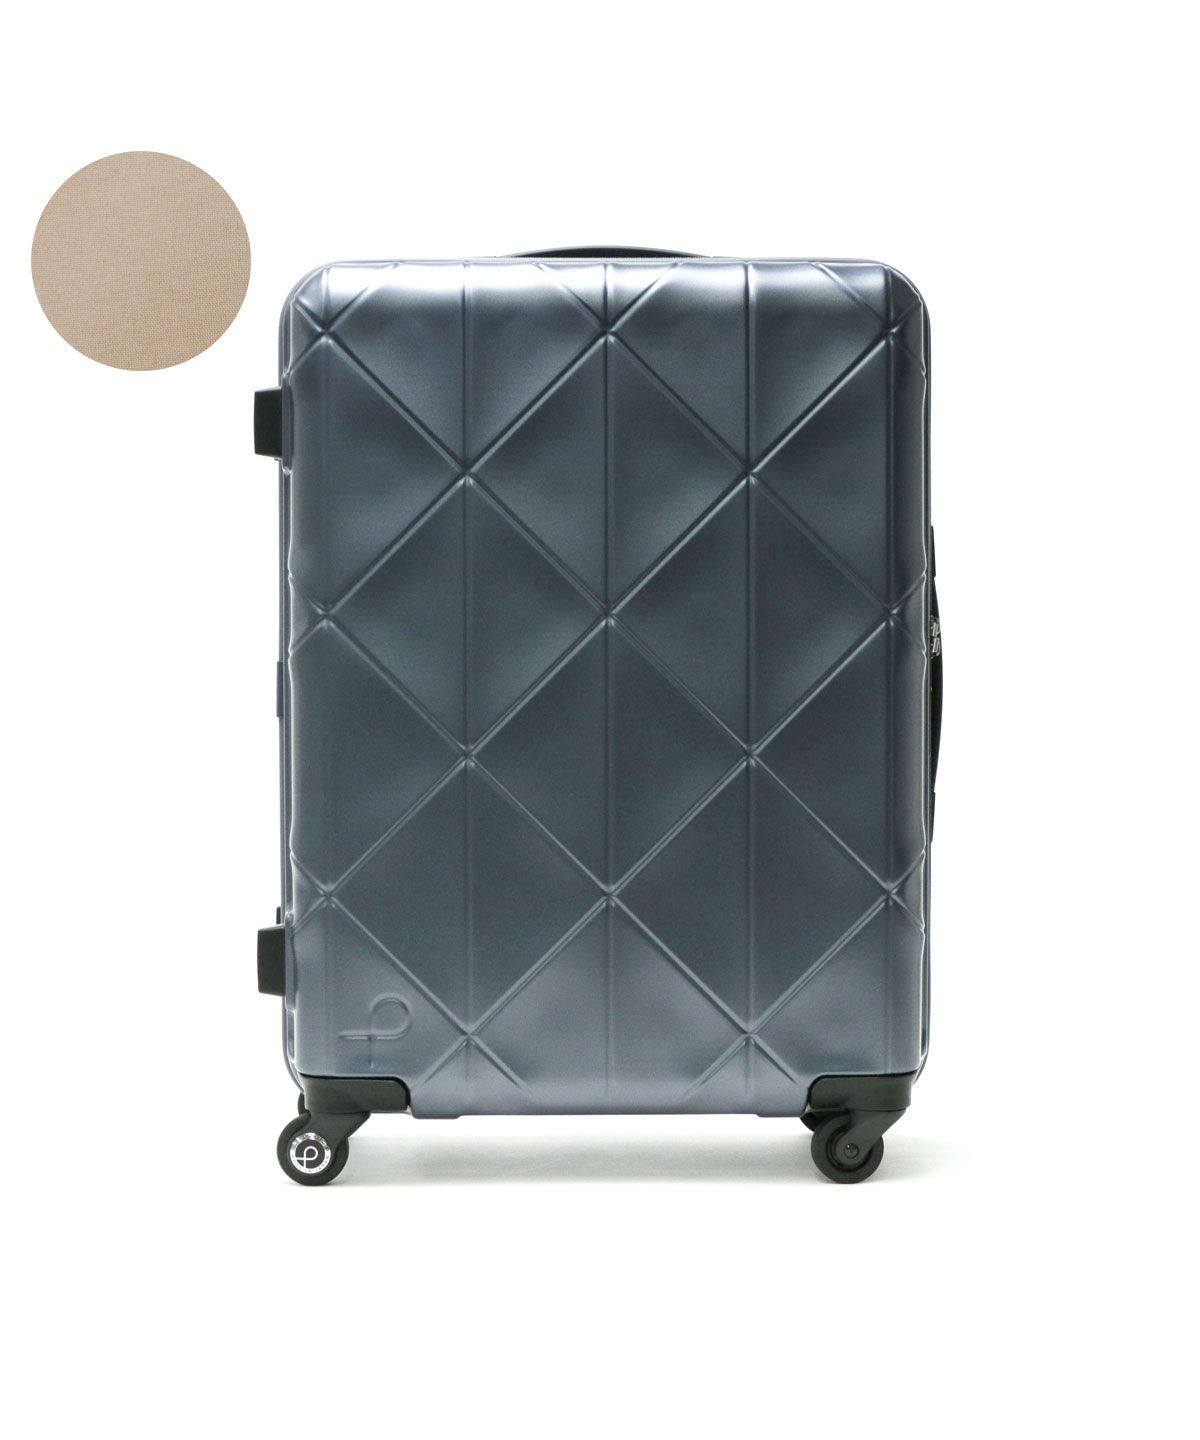 ProtecA GENIO TL プロテカ スーツケース 素晴らしい外見 - バッグ